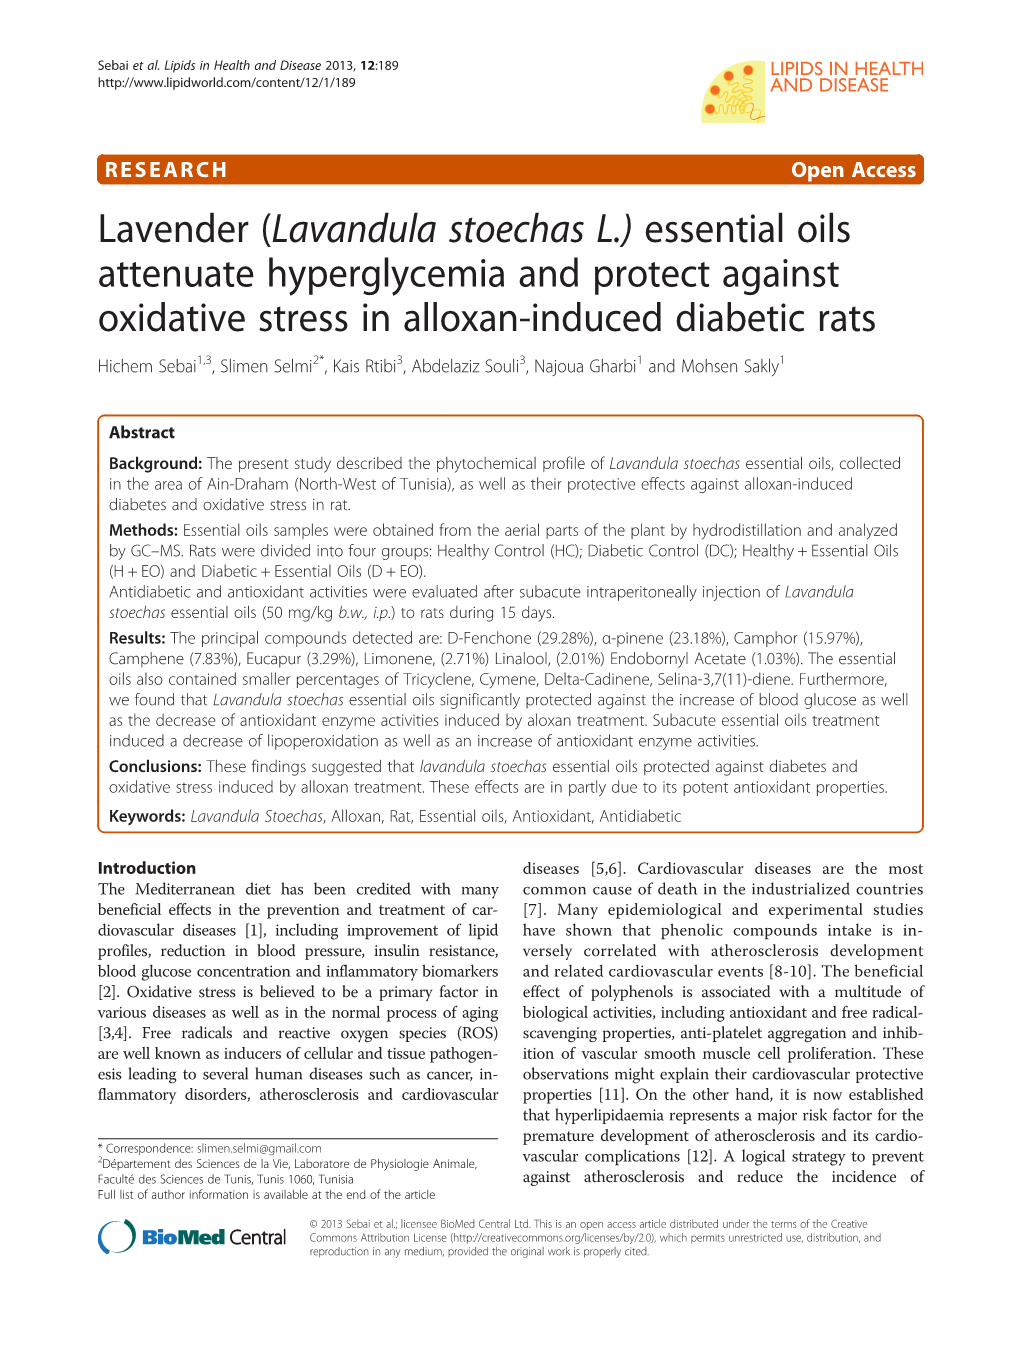 Lavender (Lavandula Stoechas L.) Essential Oils Attenuate